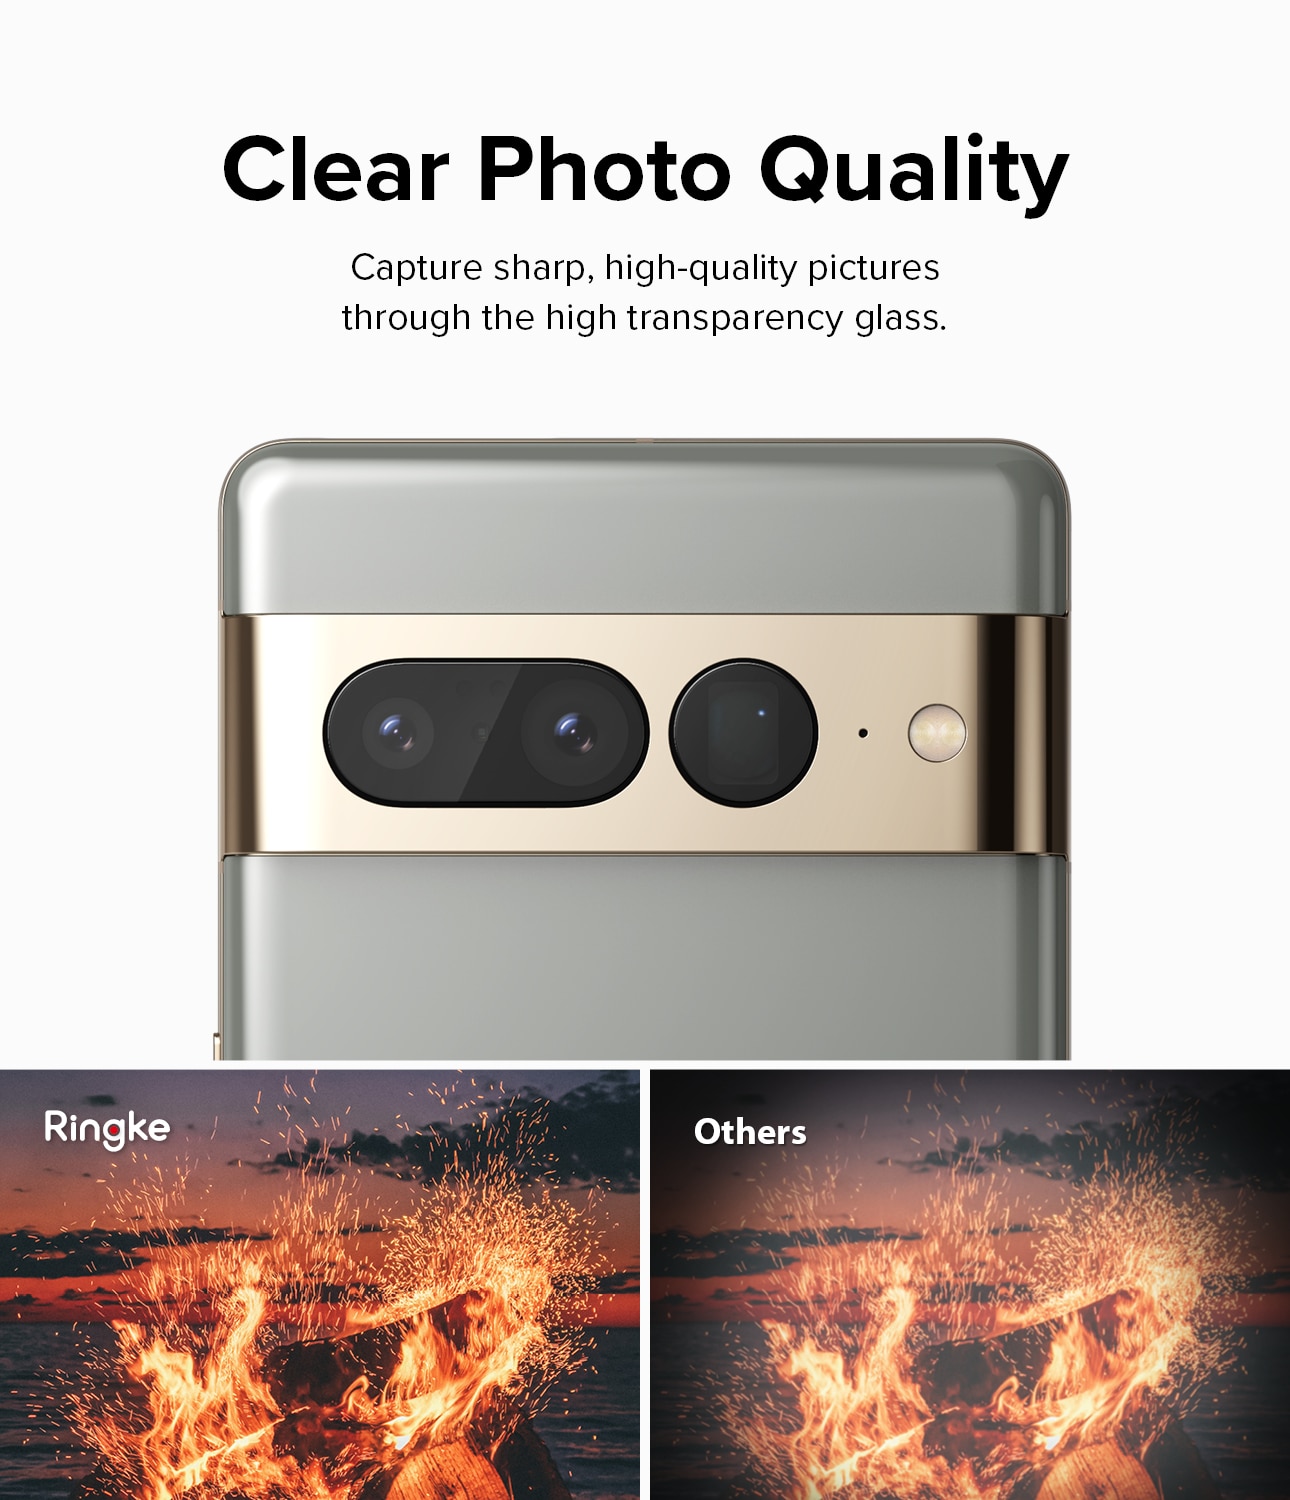 Google Pixel 7 Pro Camera Protector Glass (3-pack) Transparent